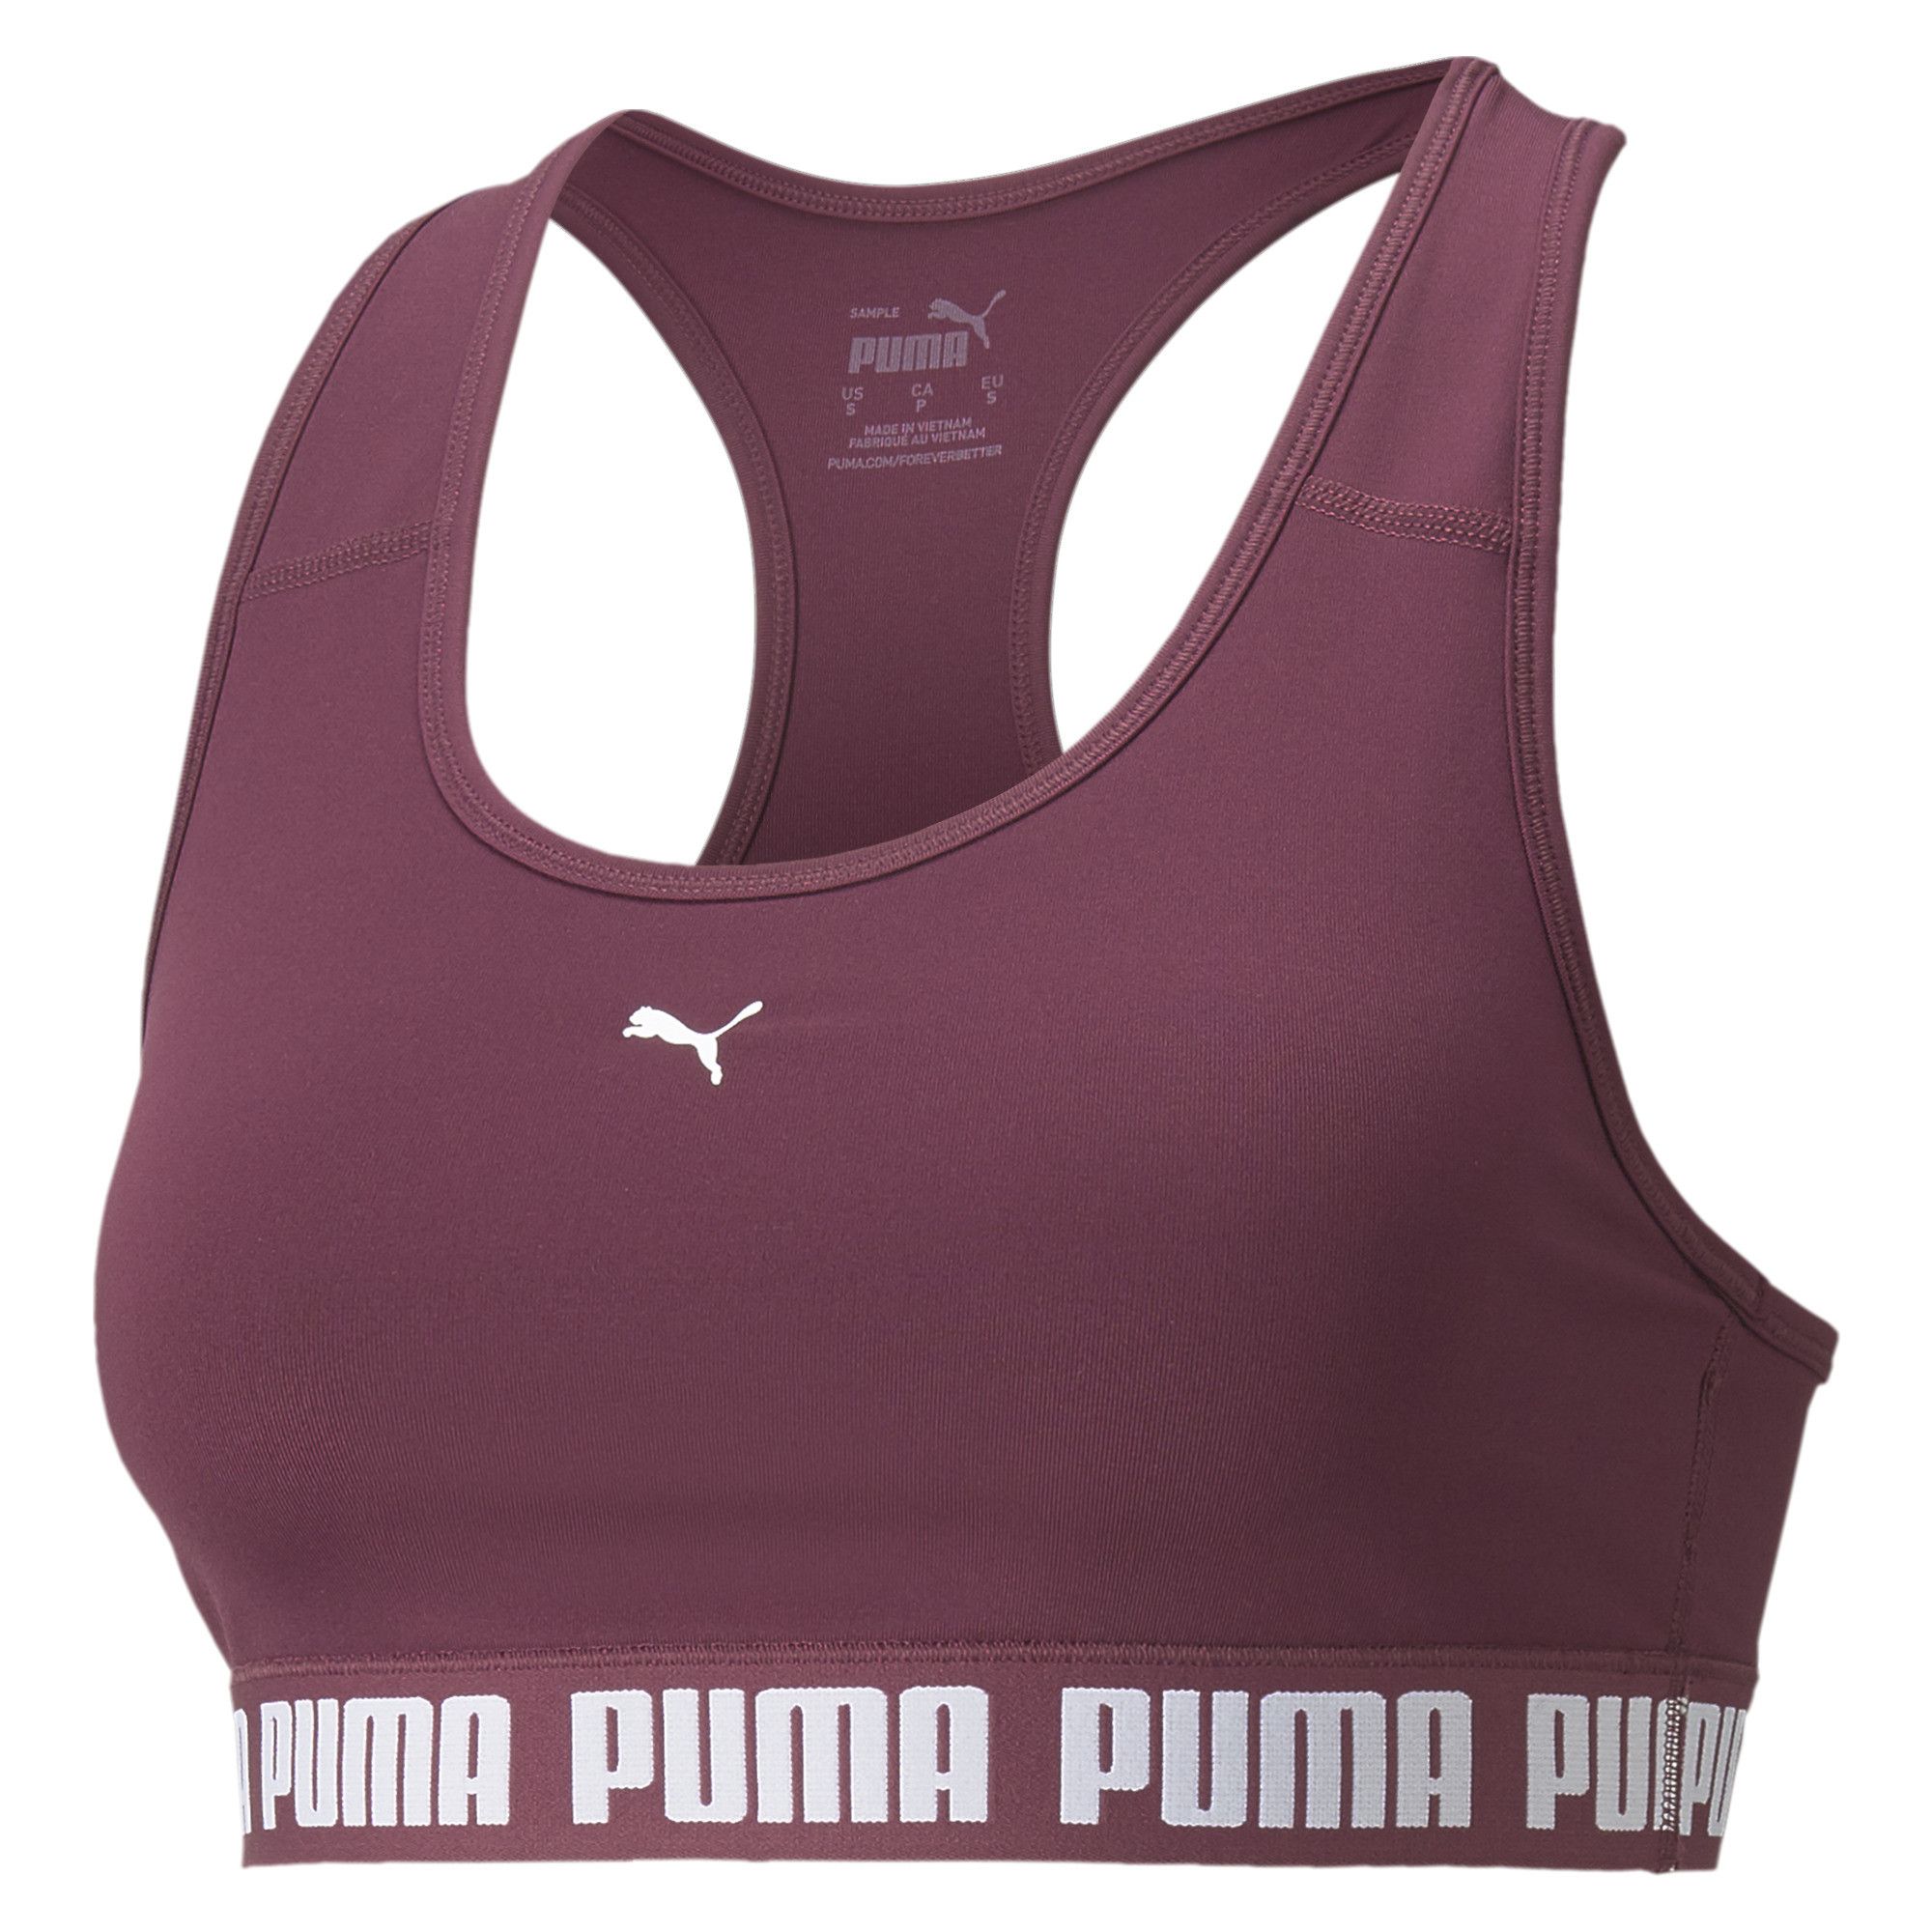 PUMA Racerback Sports Bra, Medium Women's Padded Athletic Bra